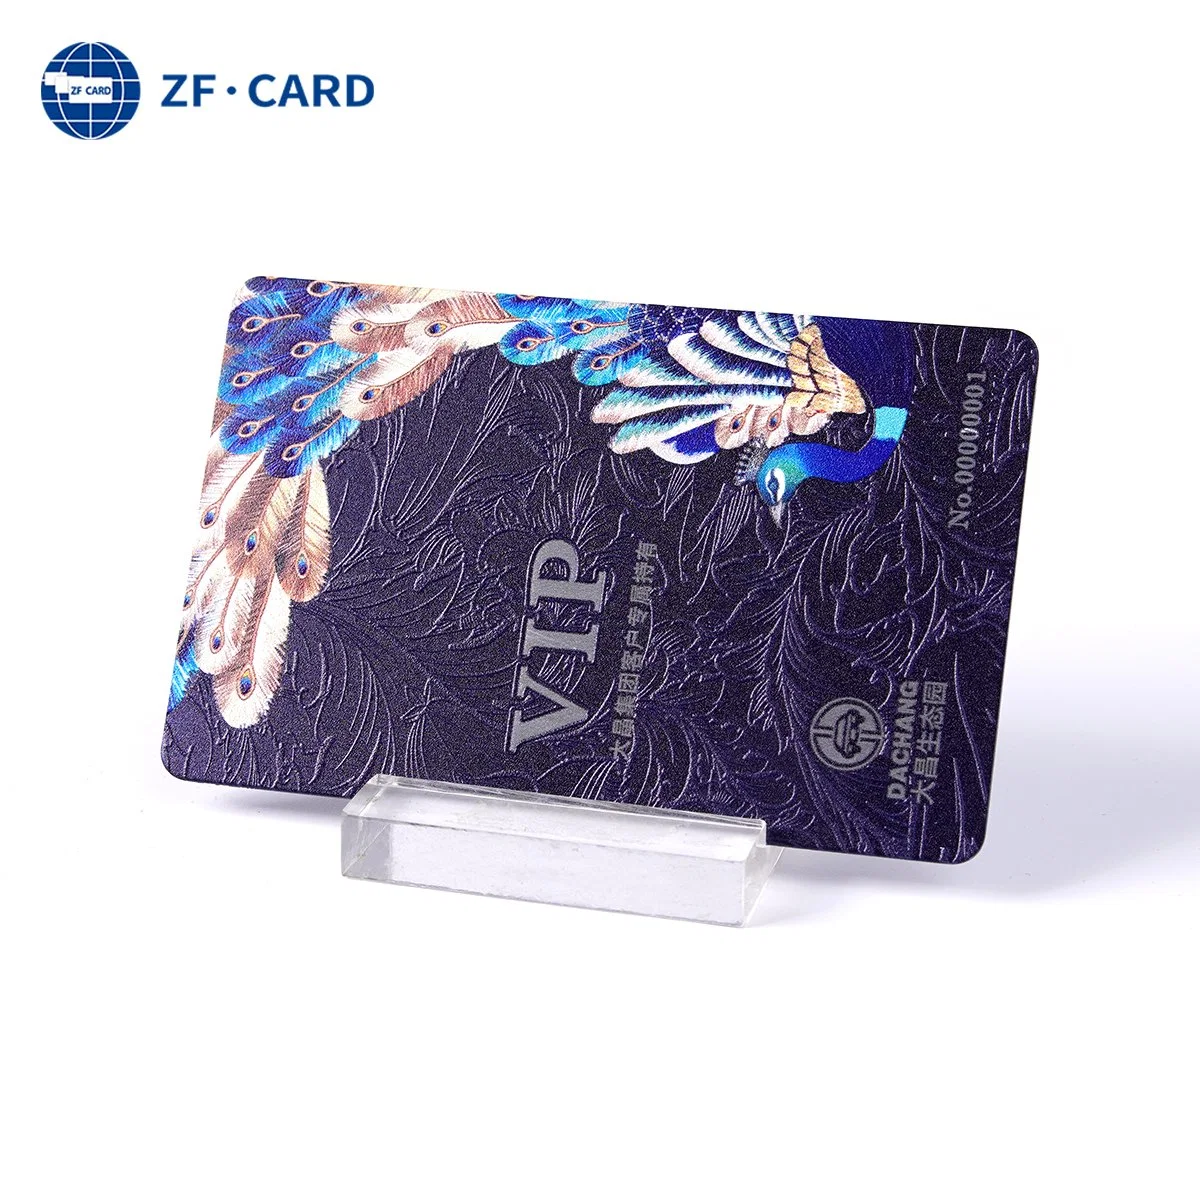 Benutzerdefinierte Kunststoff RFID Visitenkarte Speicher Smart Digital PVC NFC Visitenkarte mit Logo